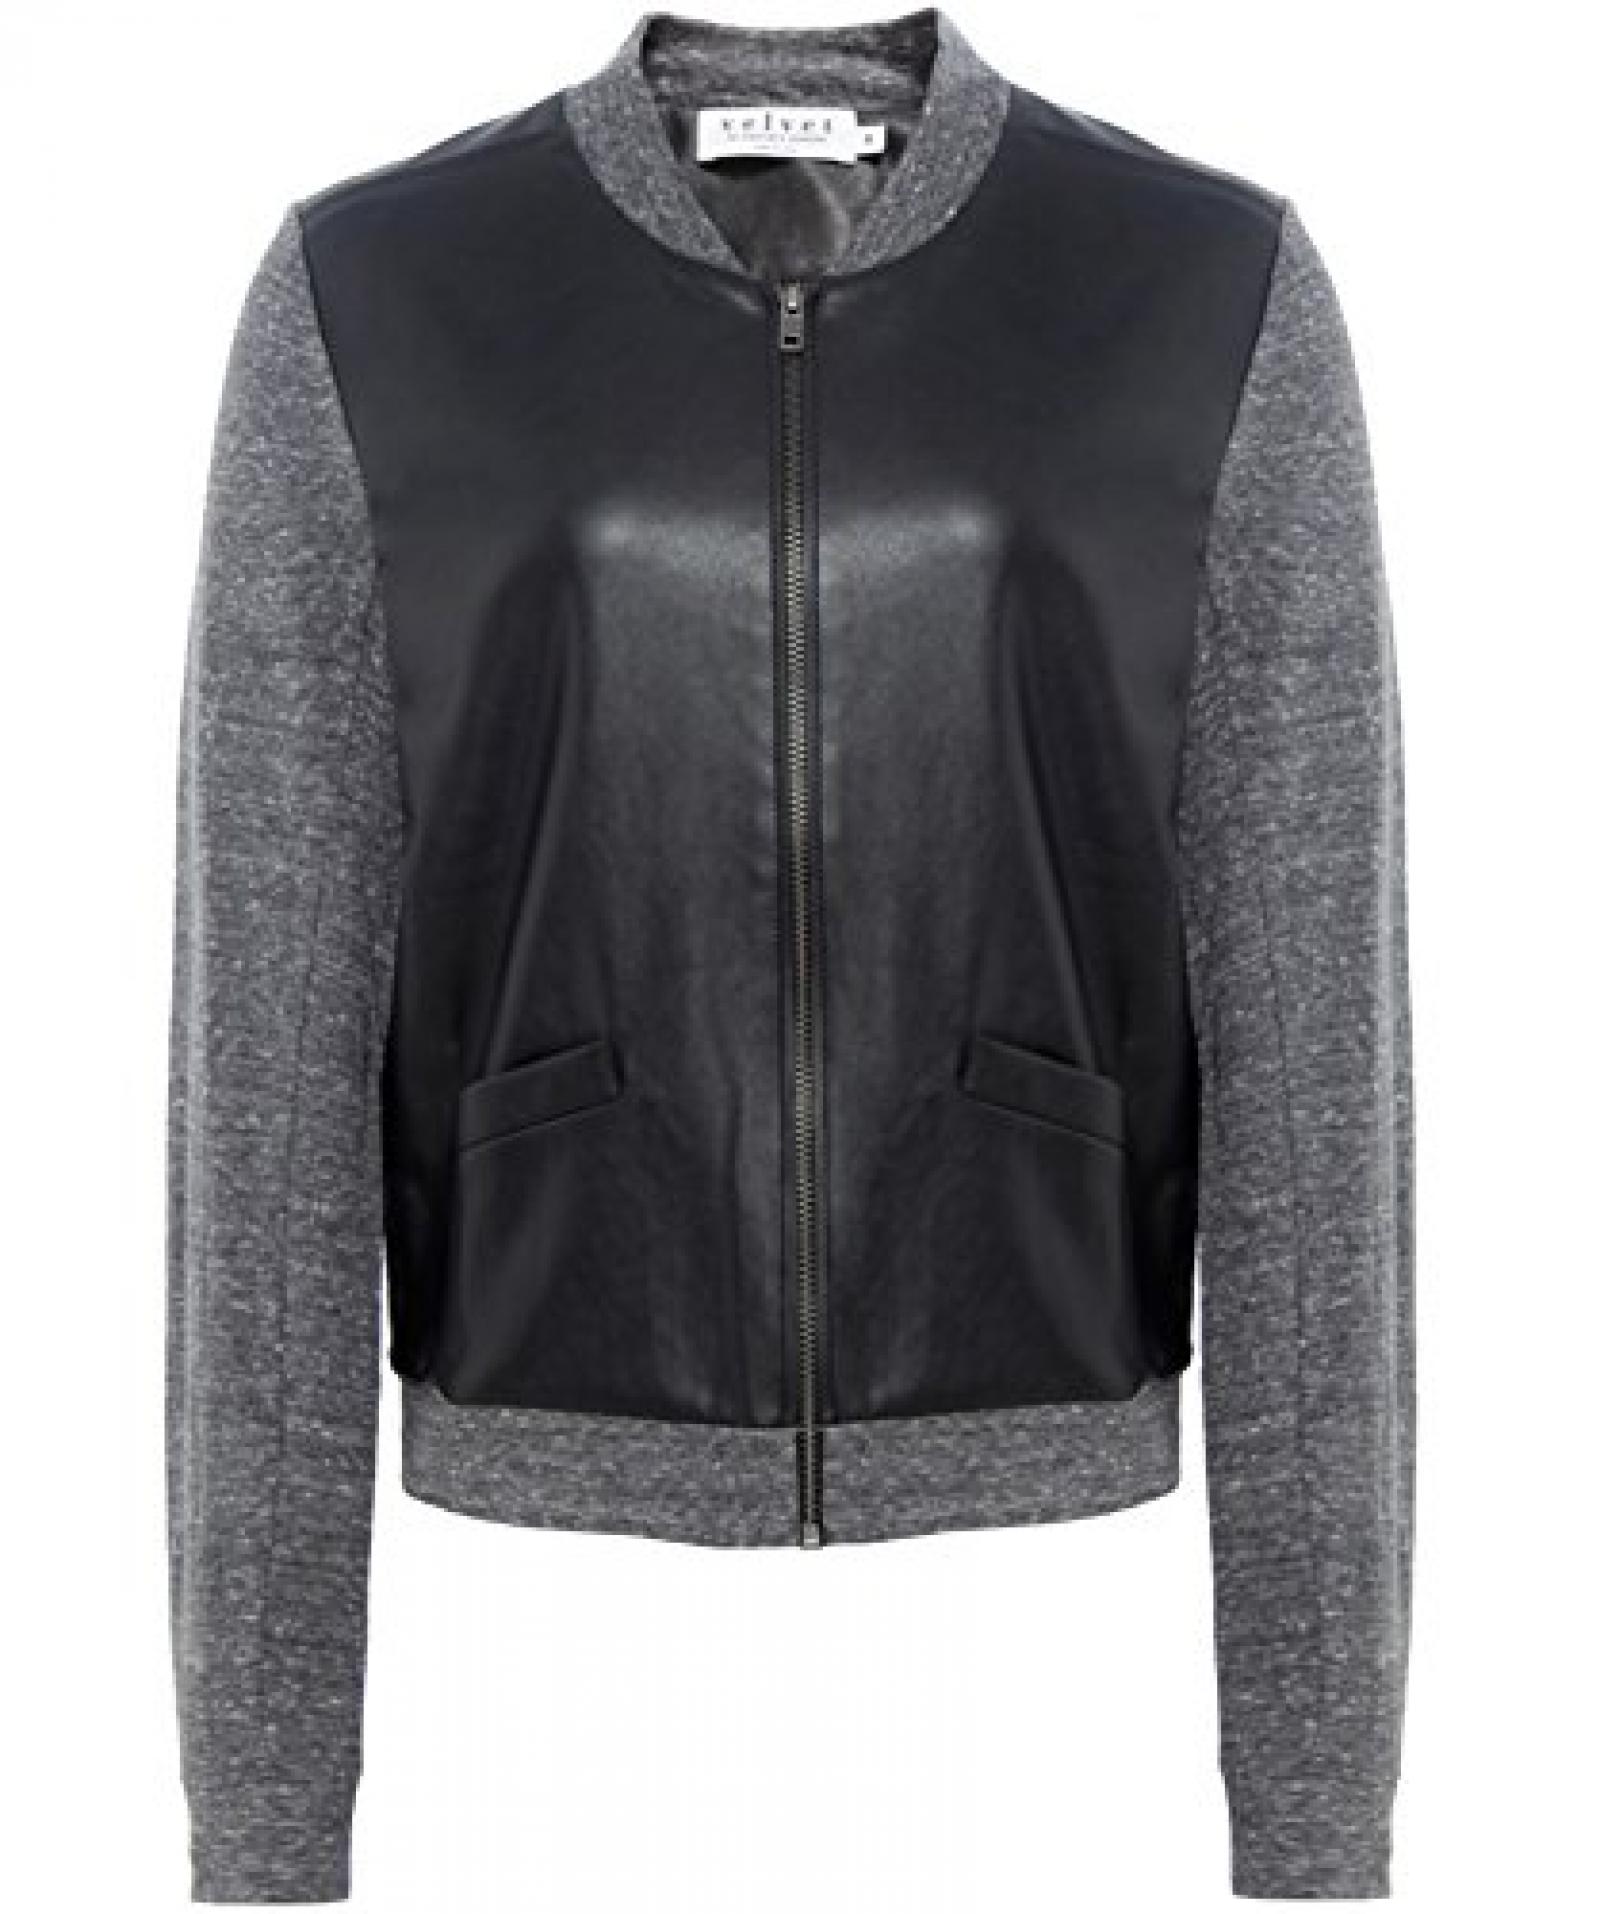 Velvet Noria Faux Leather Jersey Jacket Schwarz/Grau 